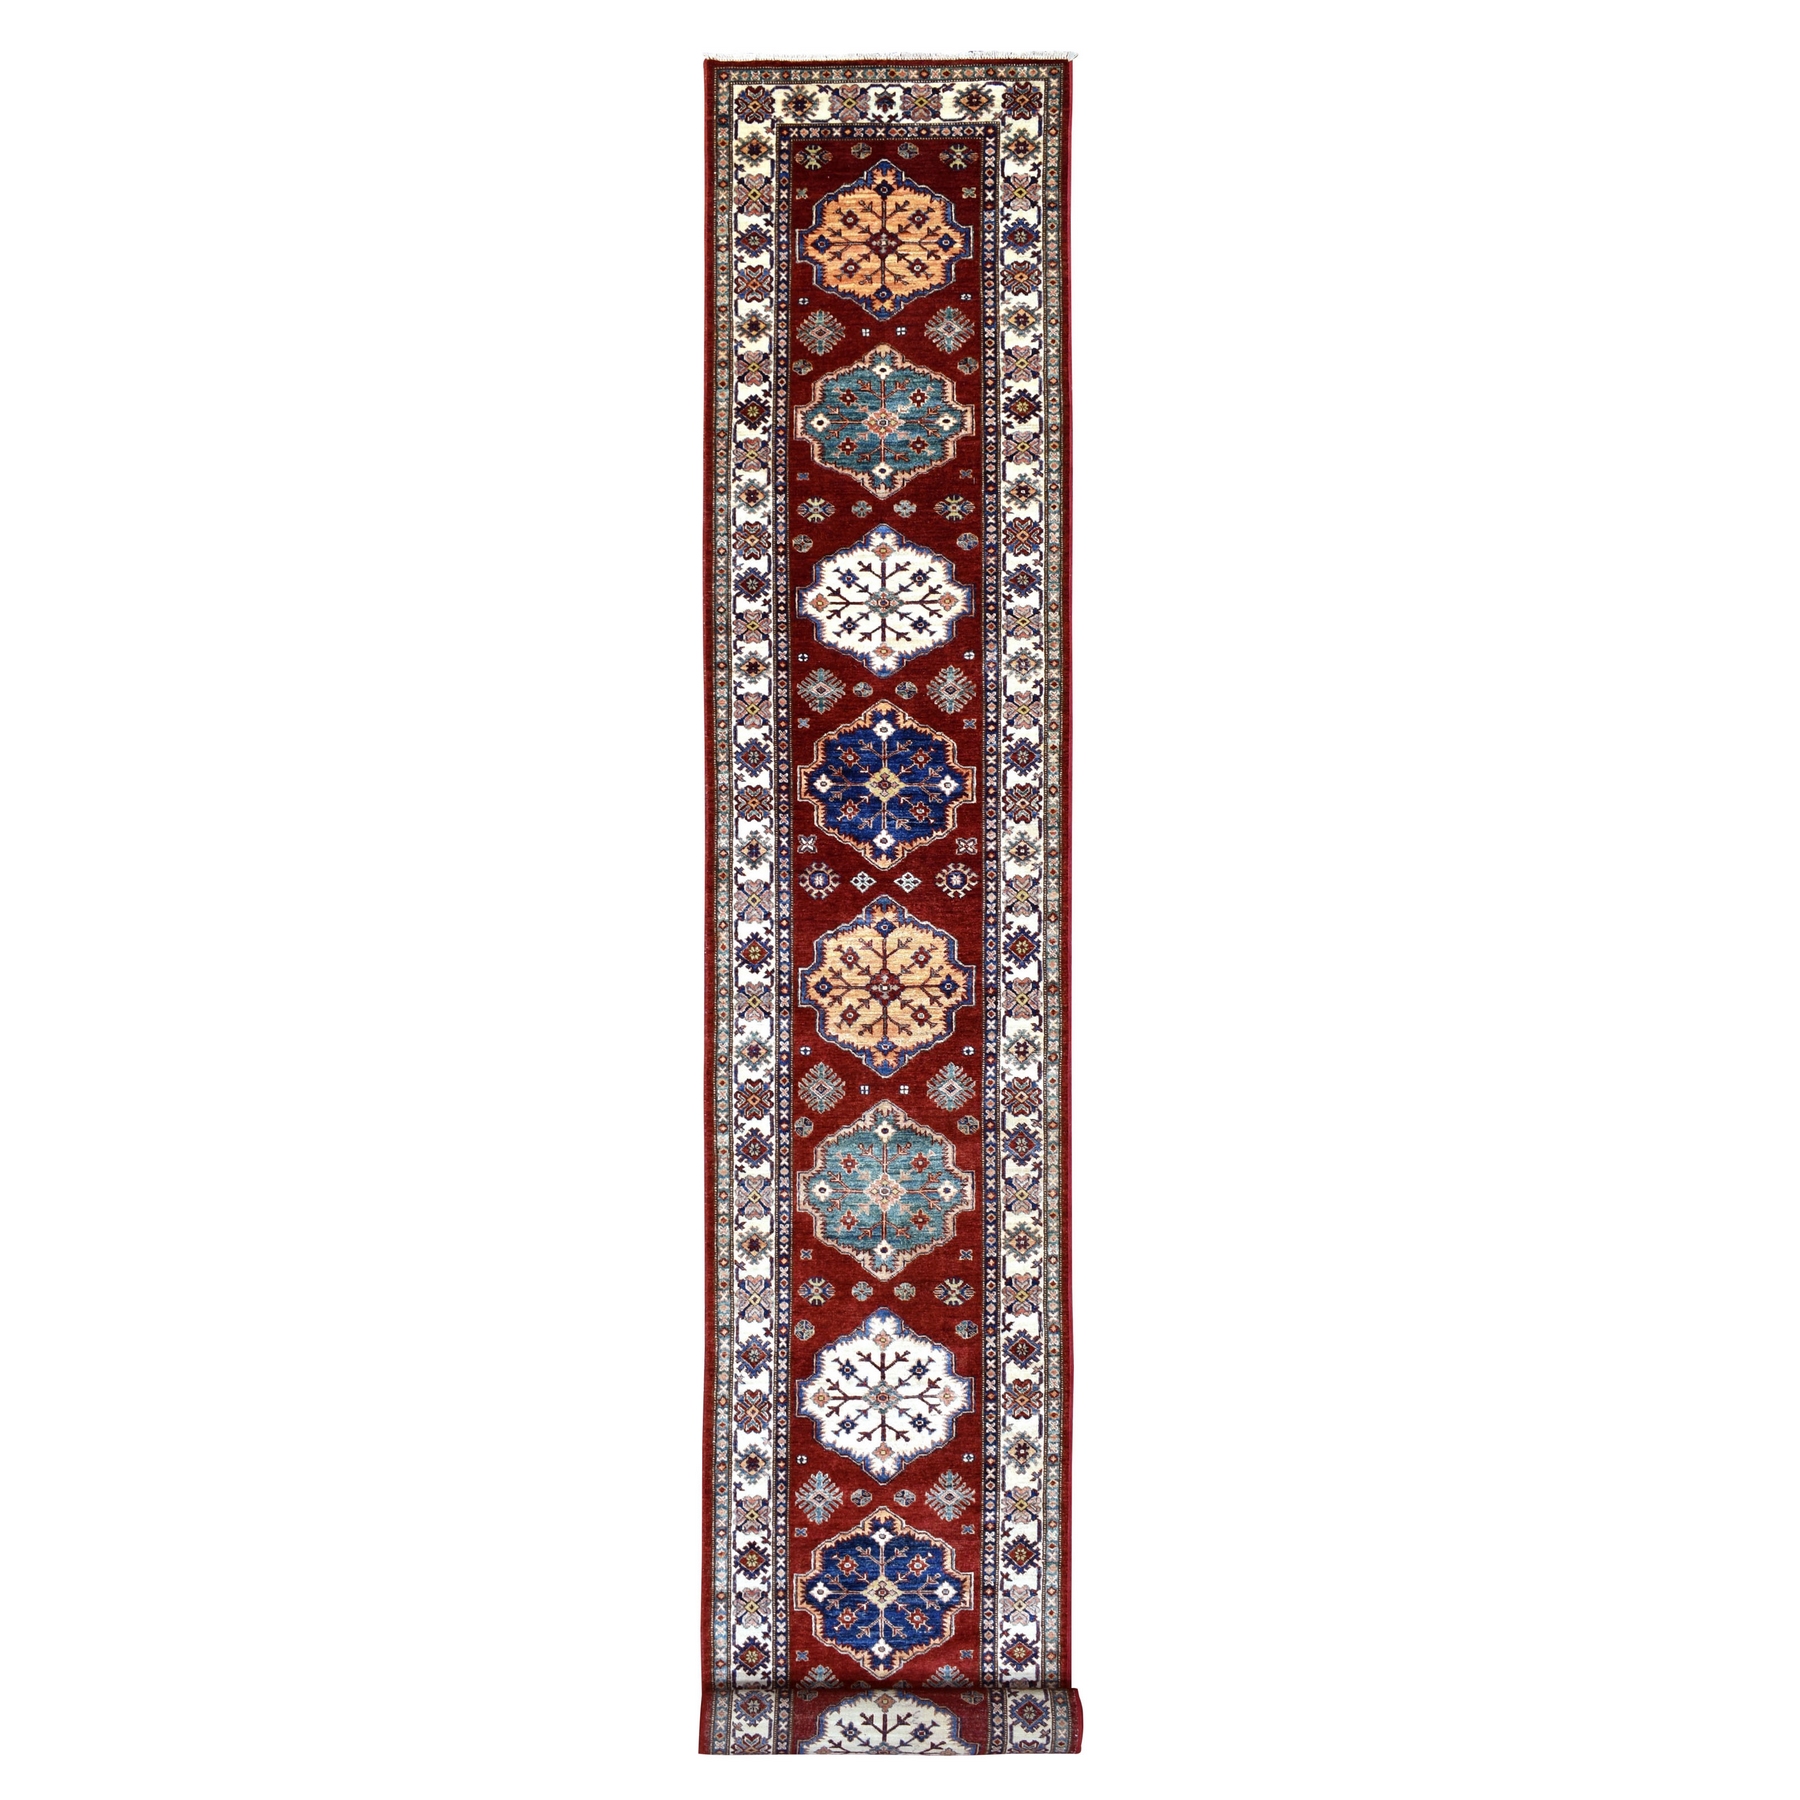 2'9"x24'7" Deep Red Super Kazak with Tribal Medallions Design Hand Woven Afghan Wool XL Runner Oriental Rug 